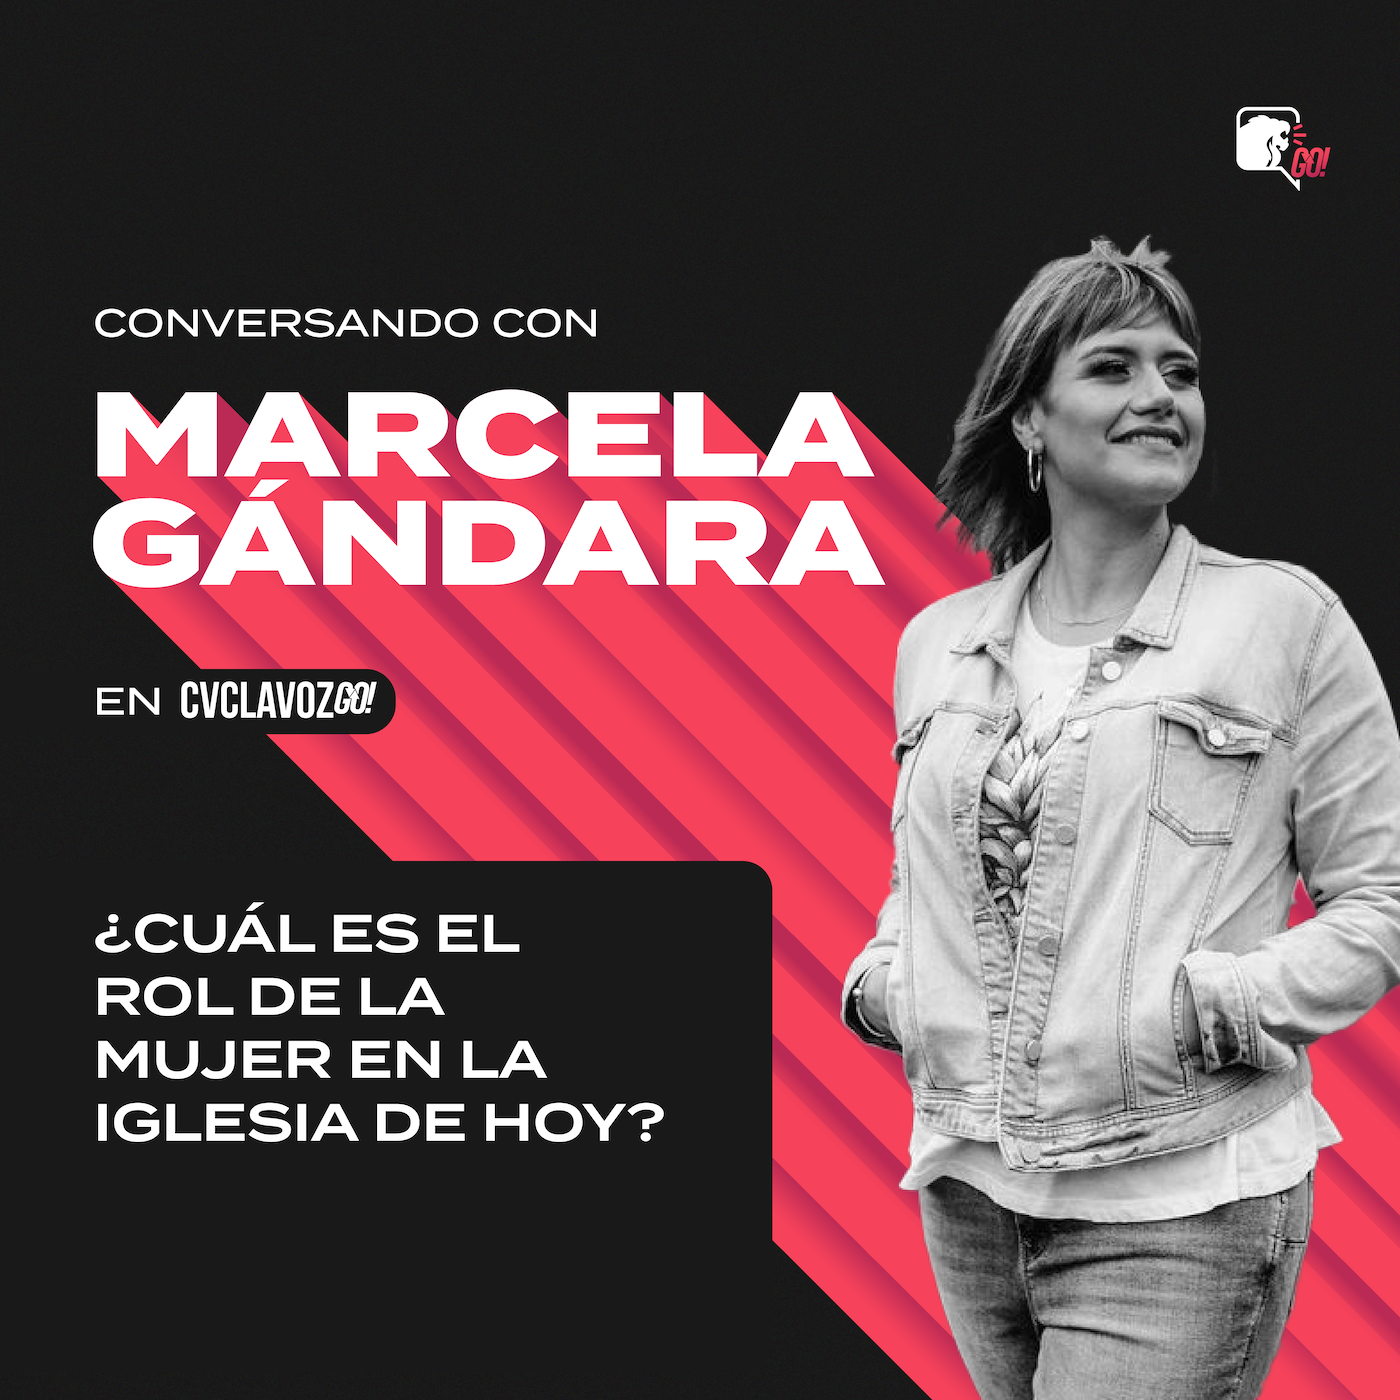 Conversando con Marcela Gandara_Imágenes Destacadas iglesia